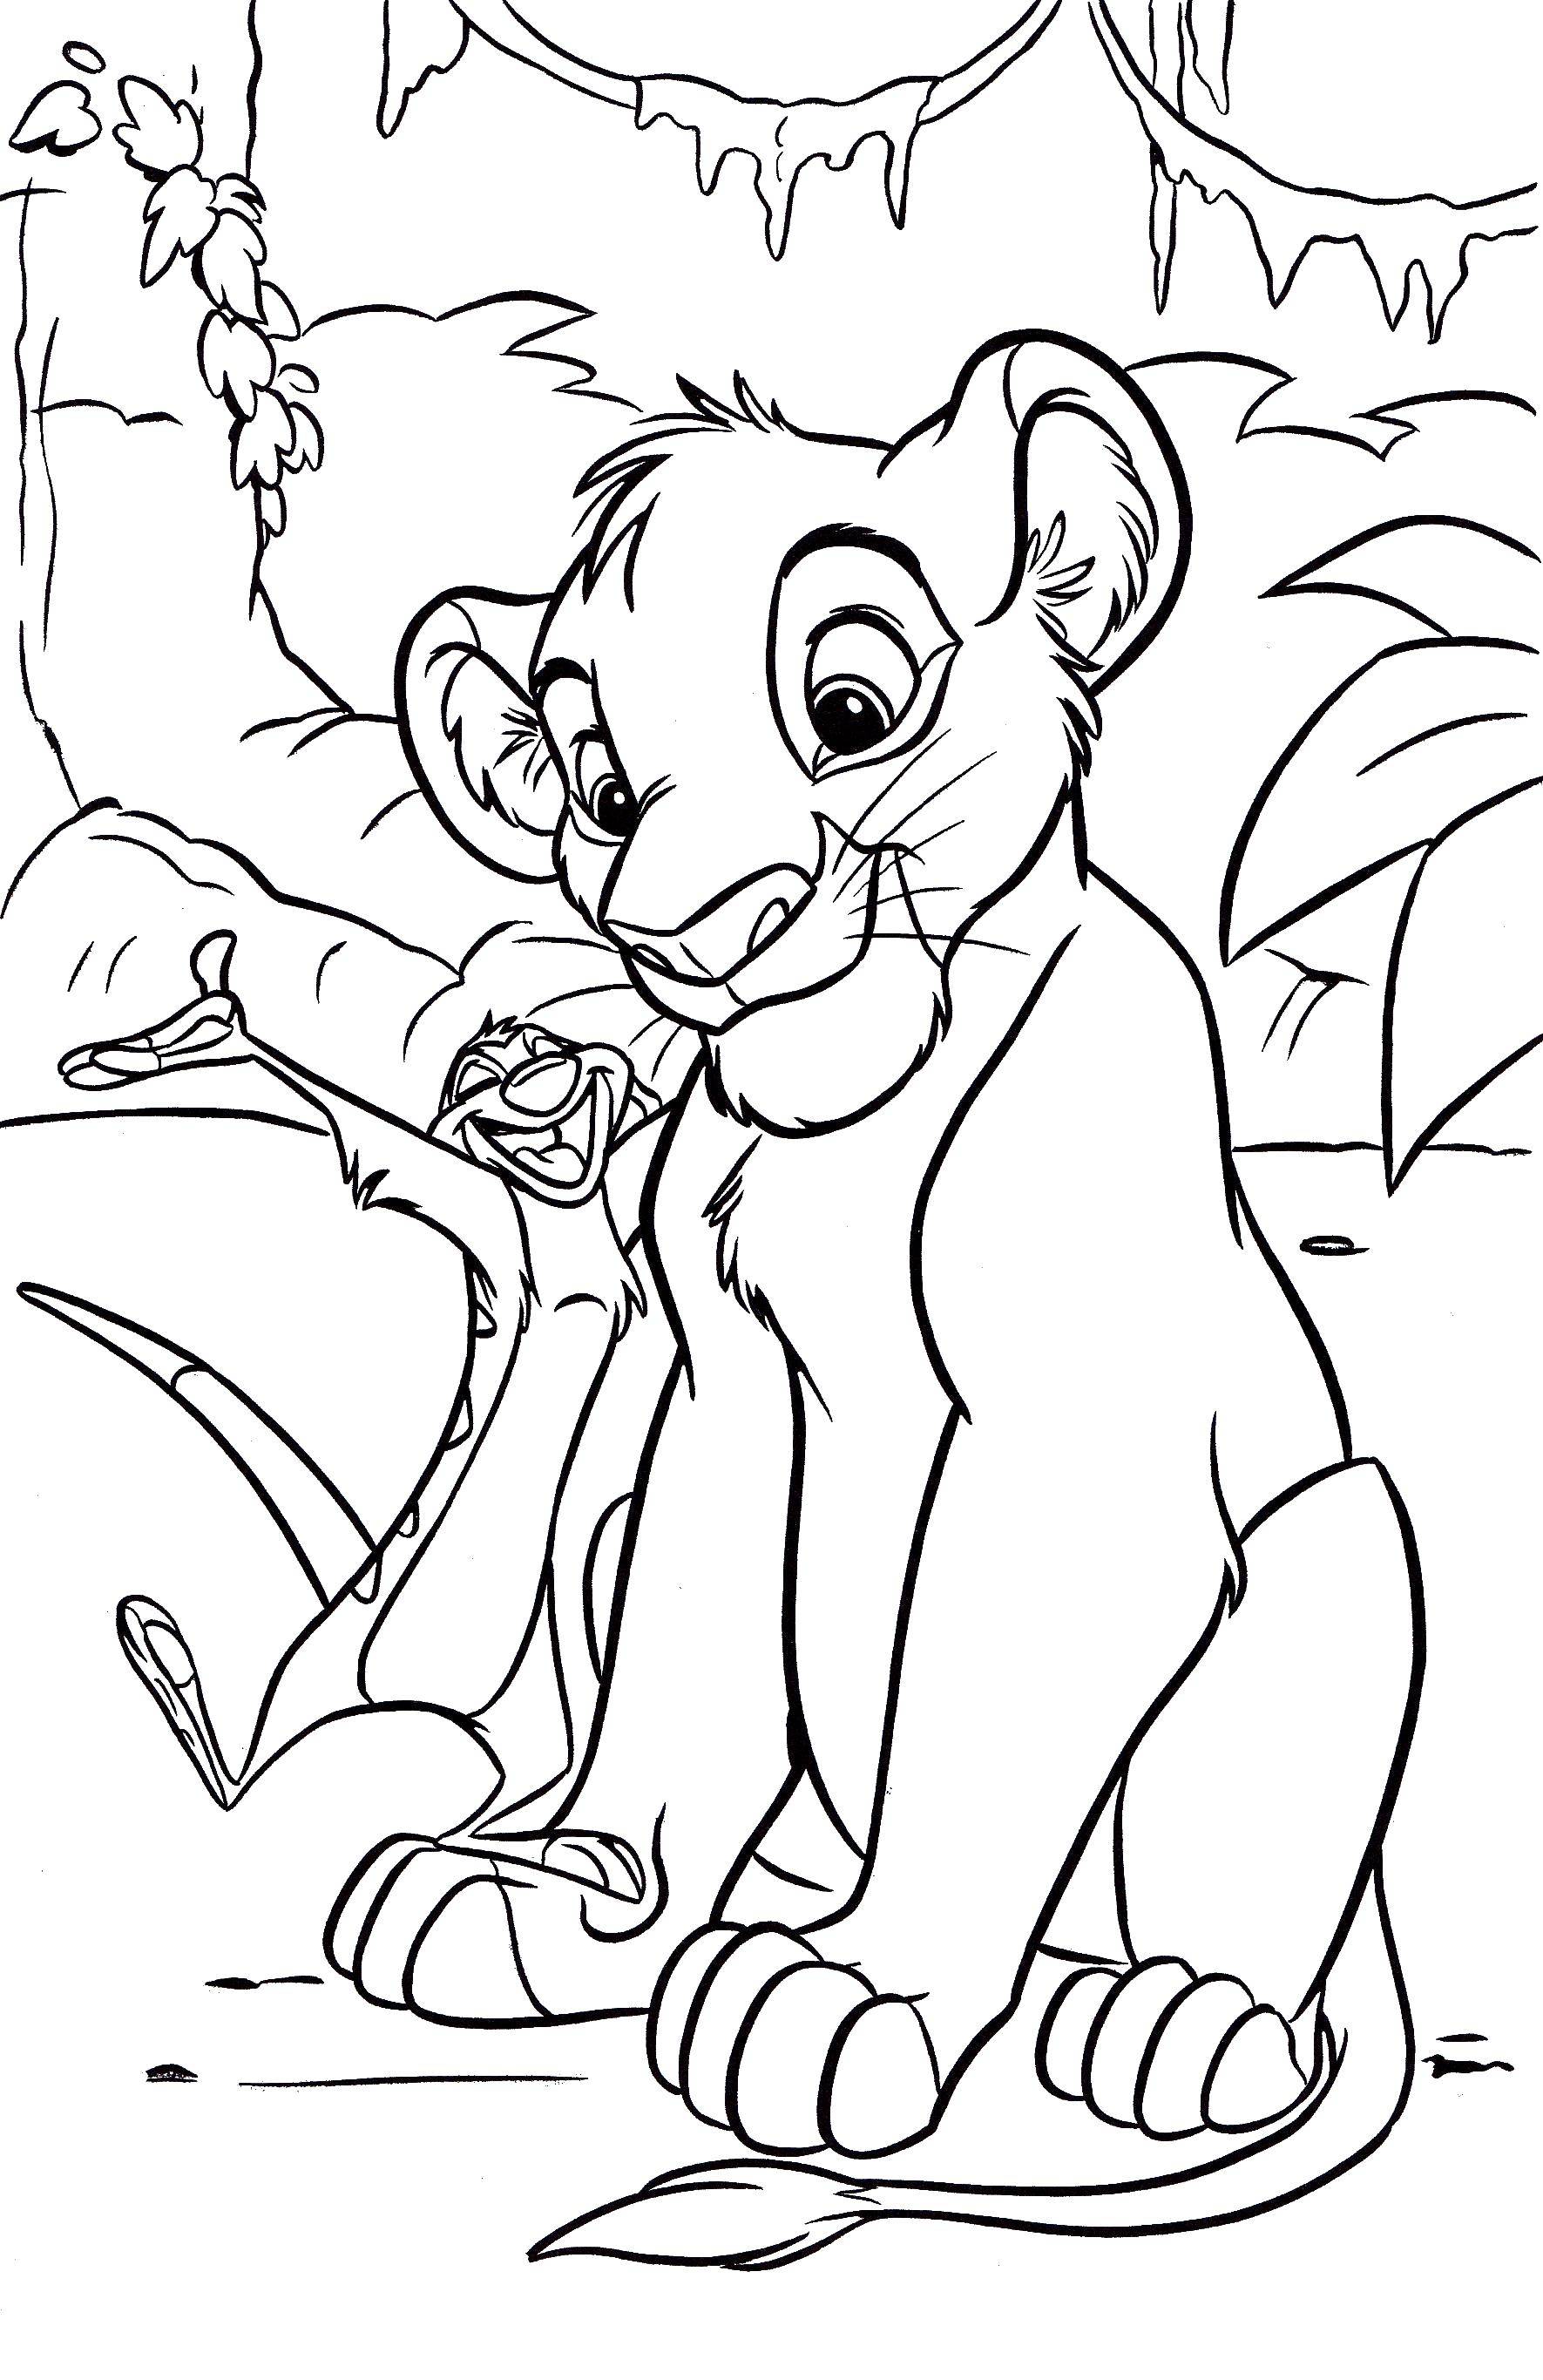 Coloring Curious lion cub. Category Disney coloring pages. Tags:  Disney, Lion King.